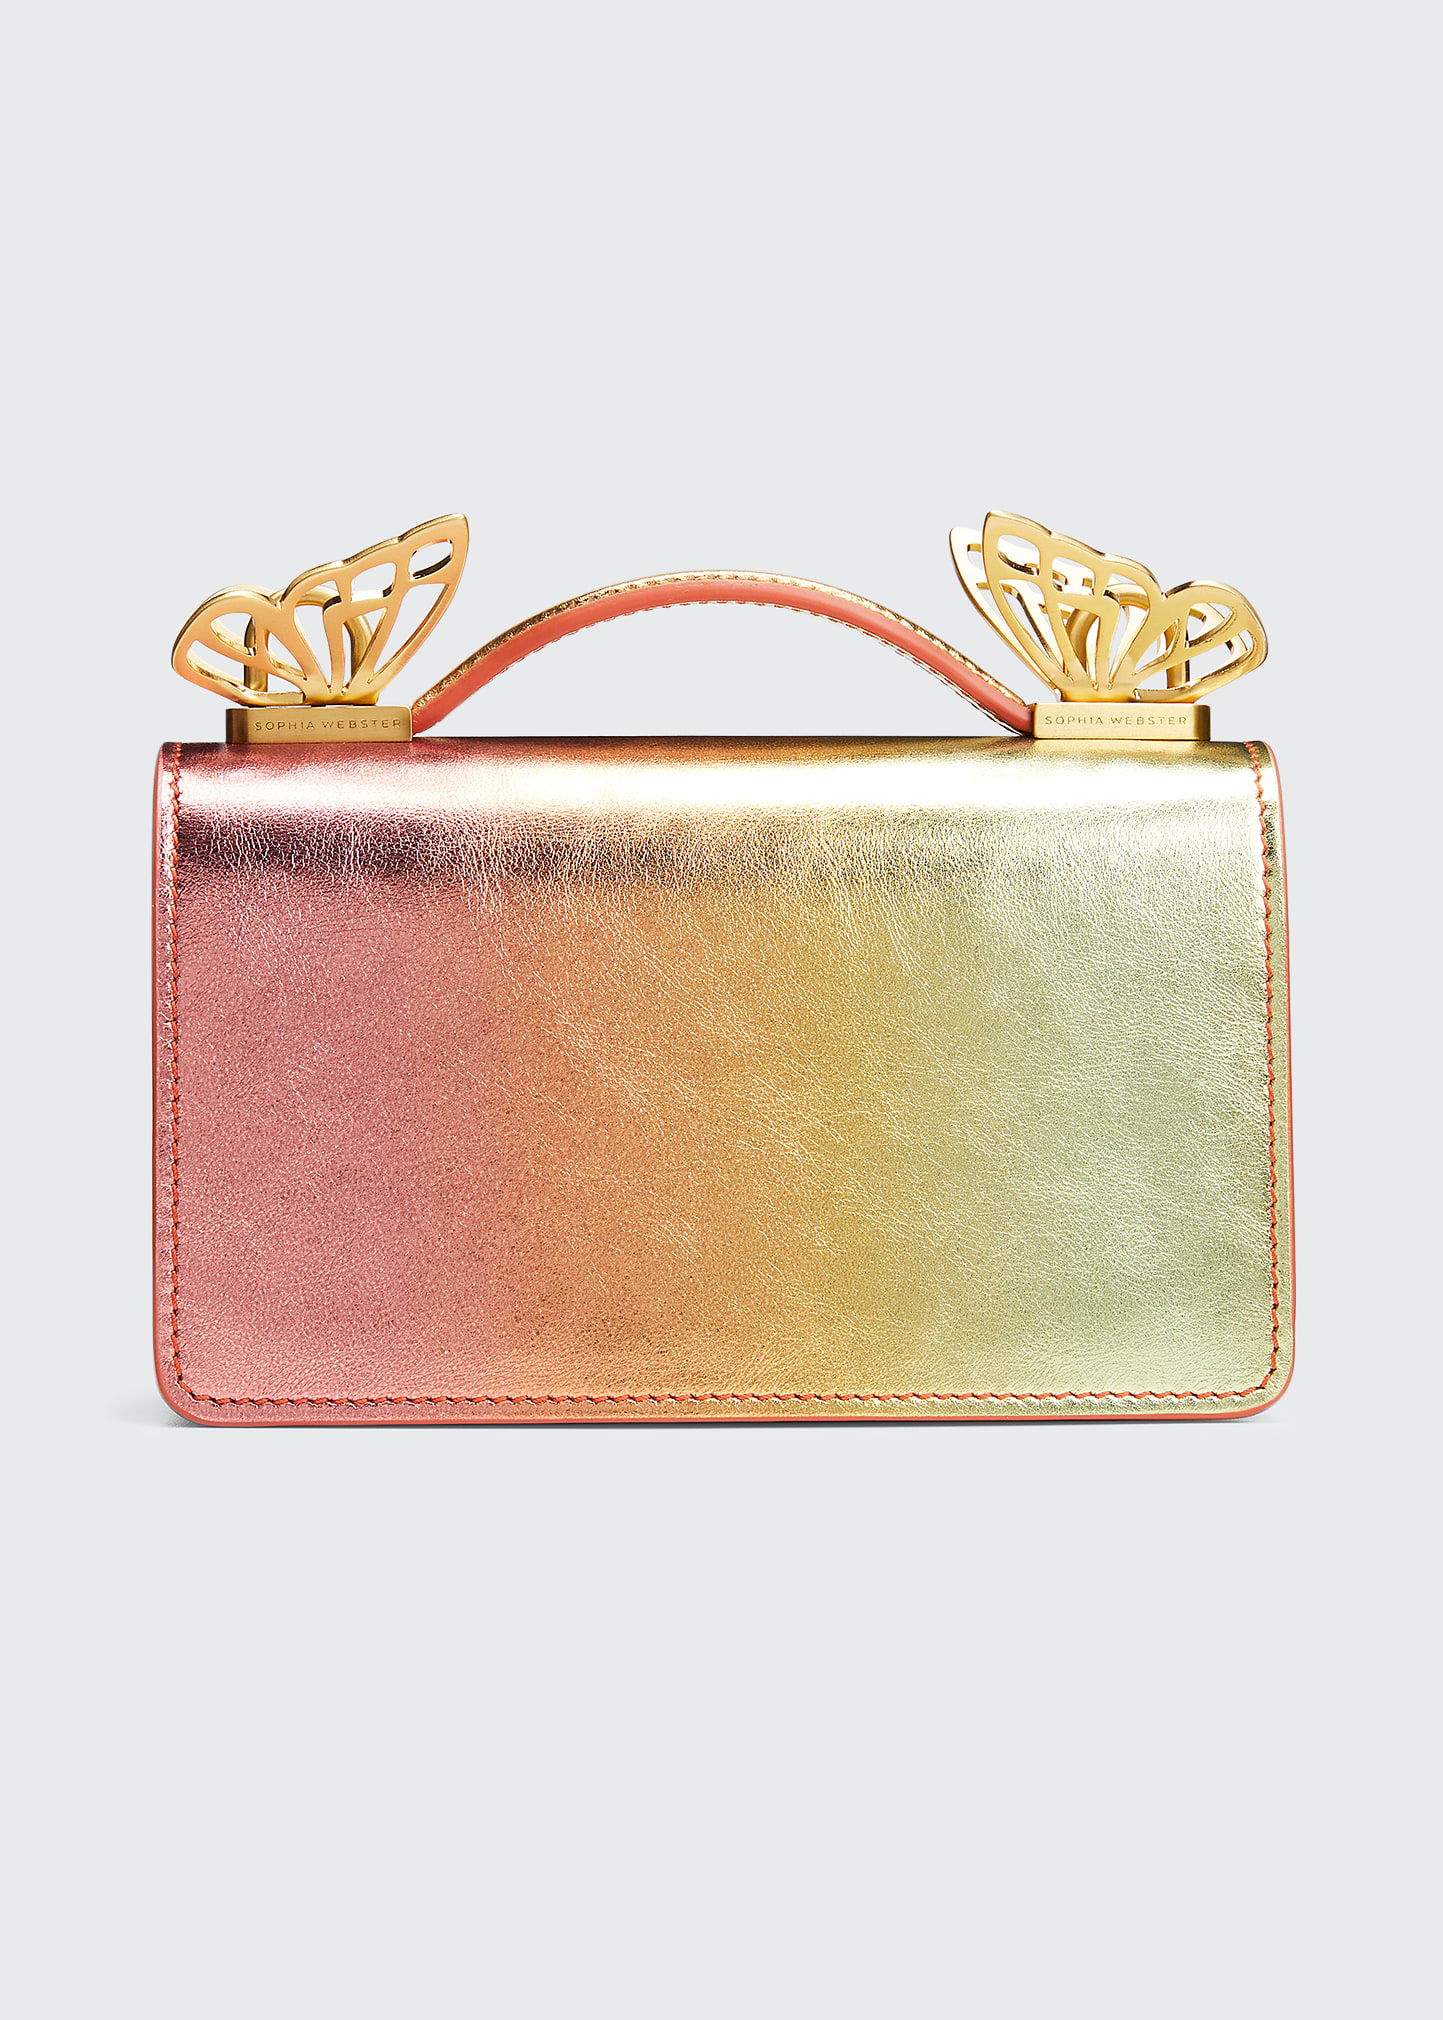 Sophia Webster Mariposa Mini Metallic Top-handle Bag In Sunset